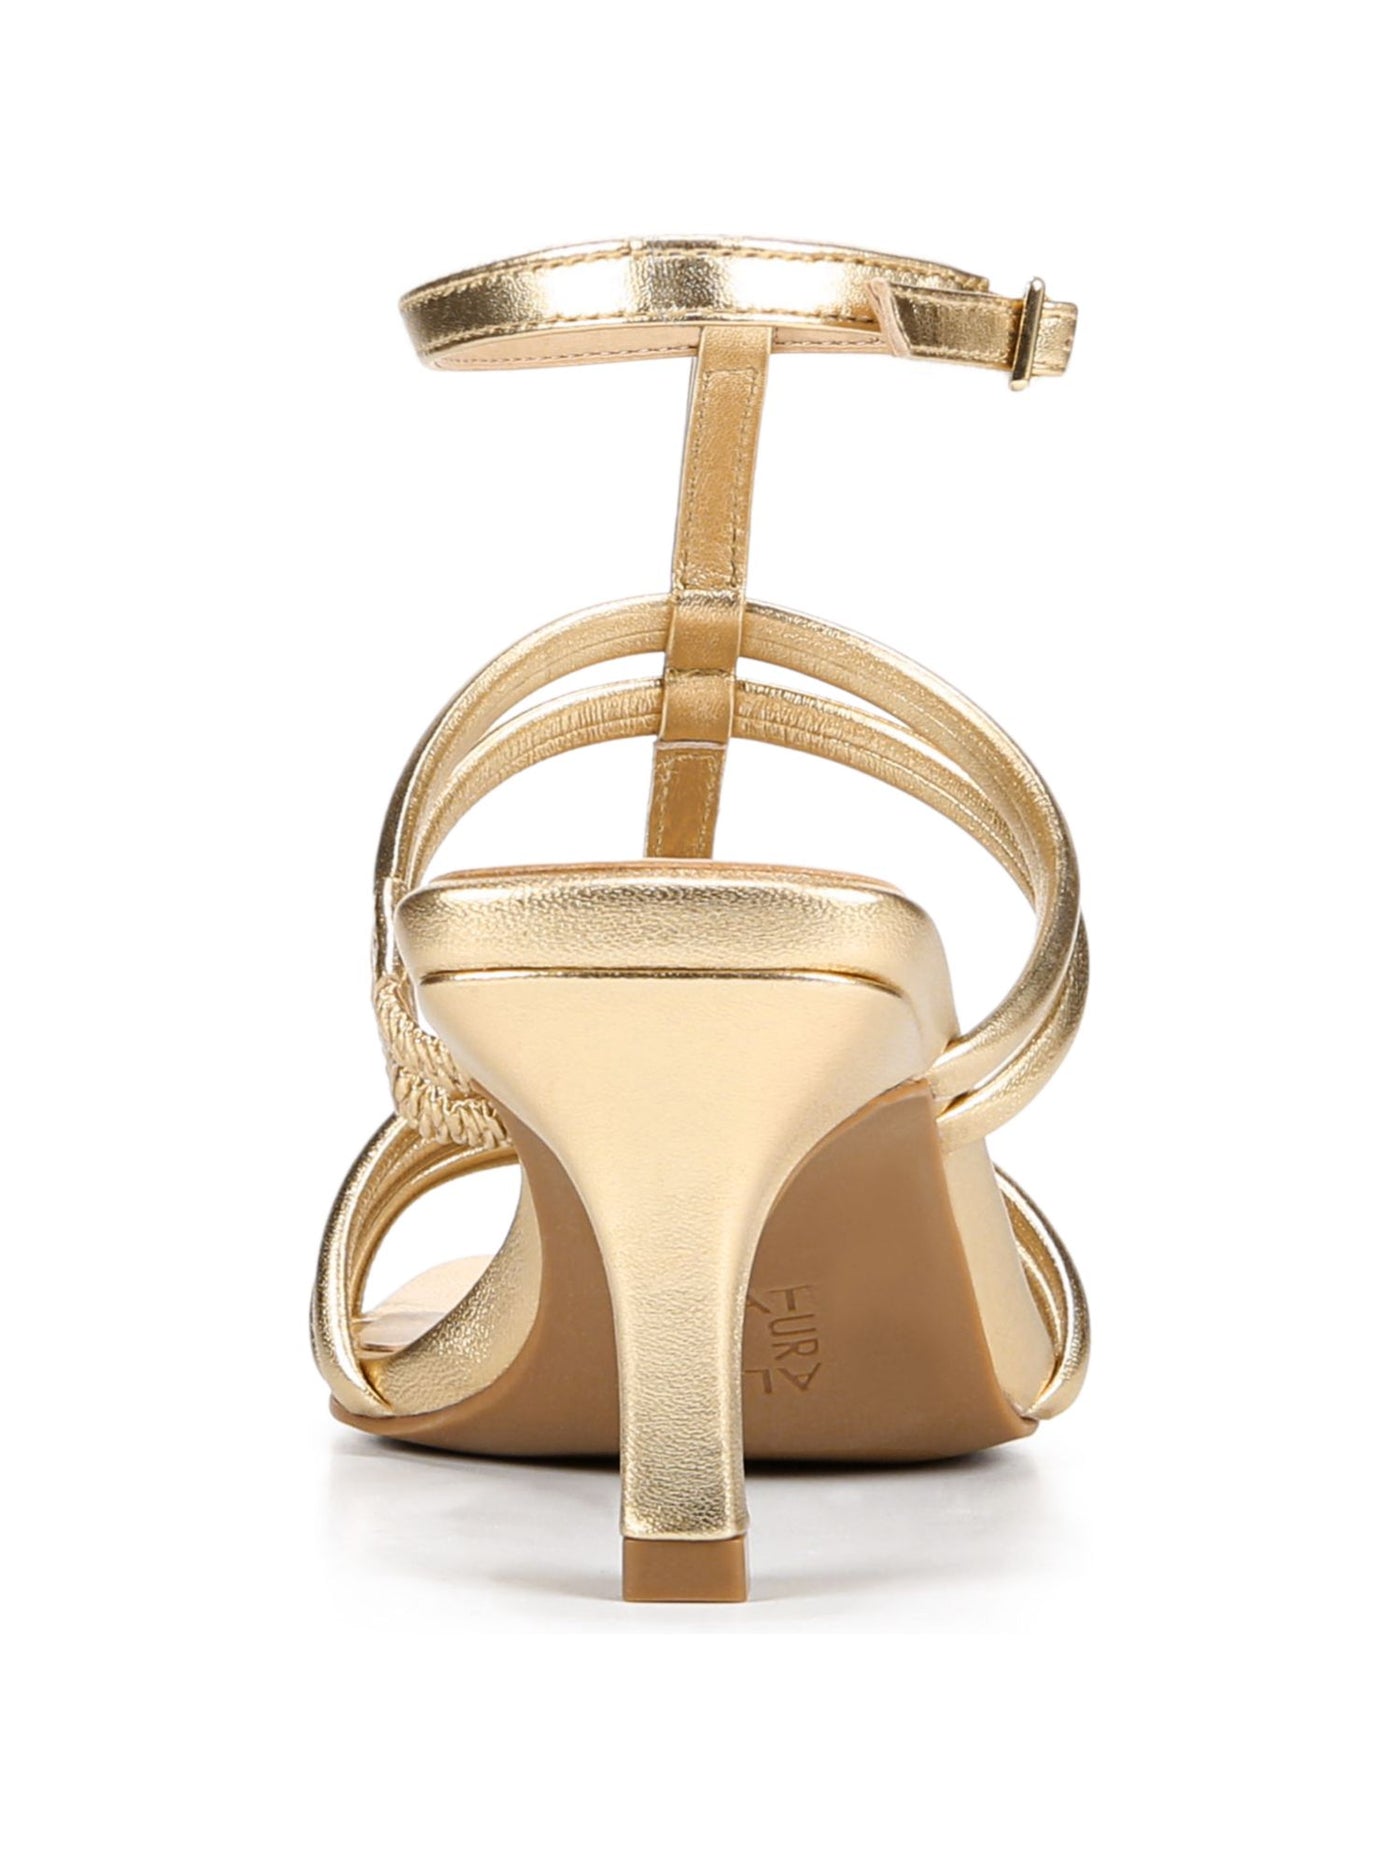 NATURALIZER Womens Gold Non-Slip Comfort Starla Square Toe Stiletto Buckle Leather Dress Heeled Sandal 9.5 M